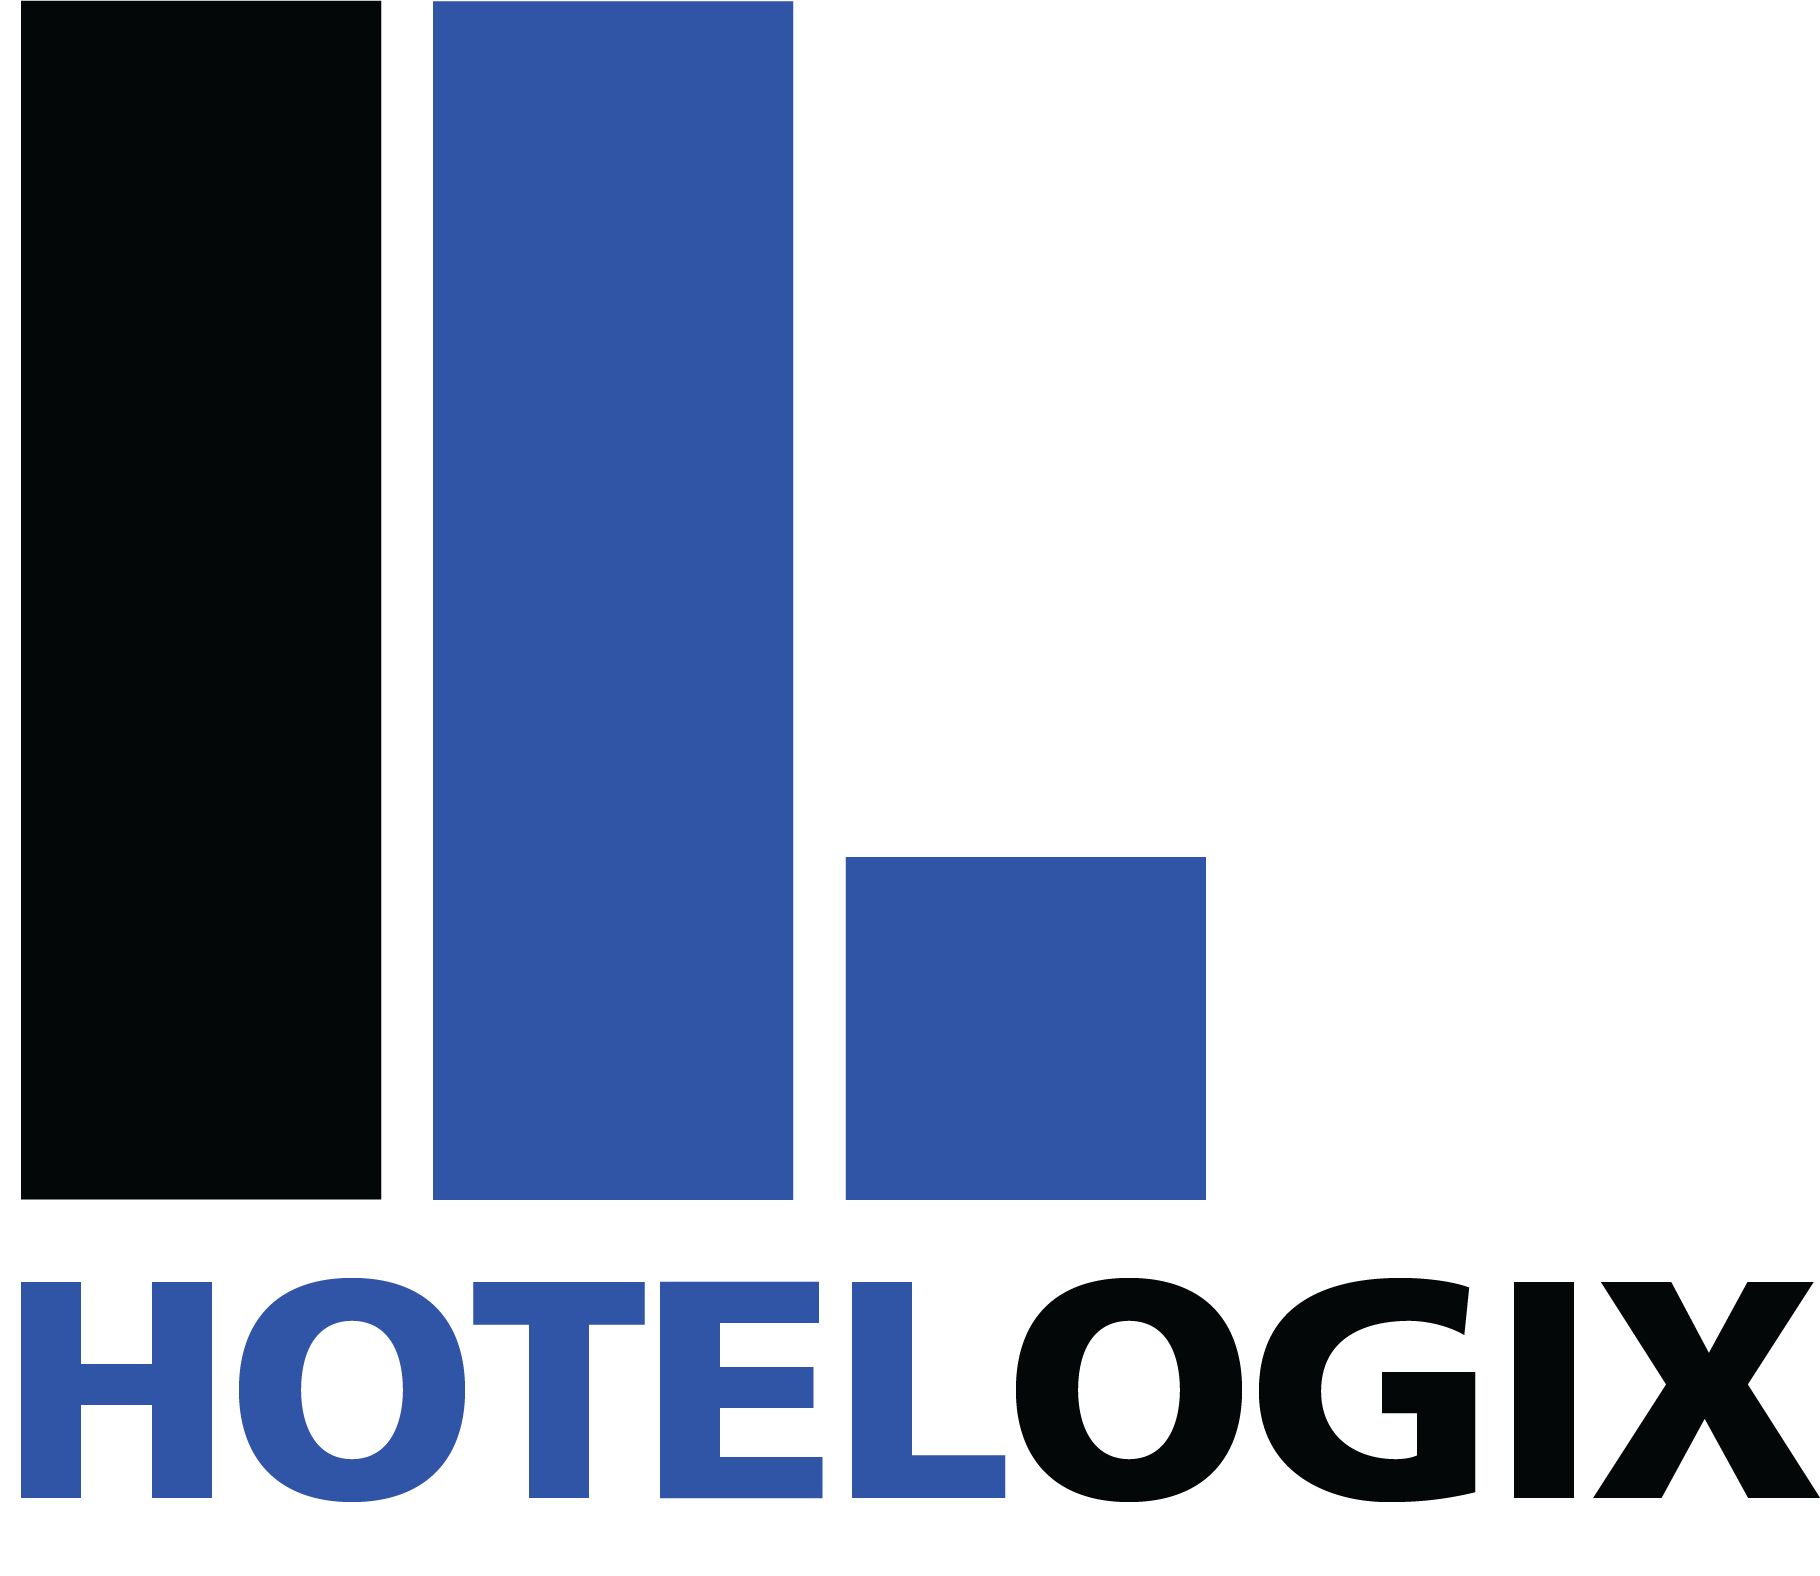 Hotelogix Blog: Tips & Trends in Hospitality